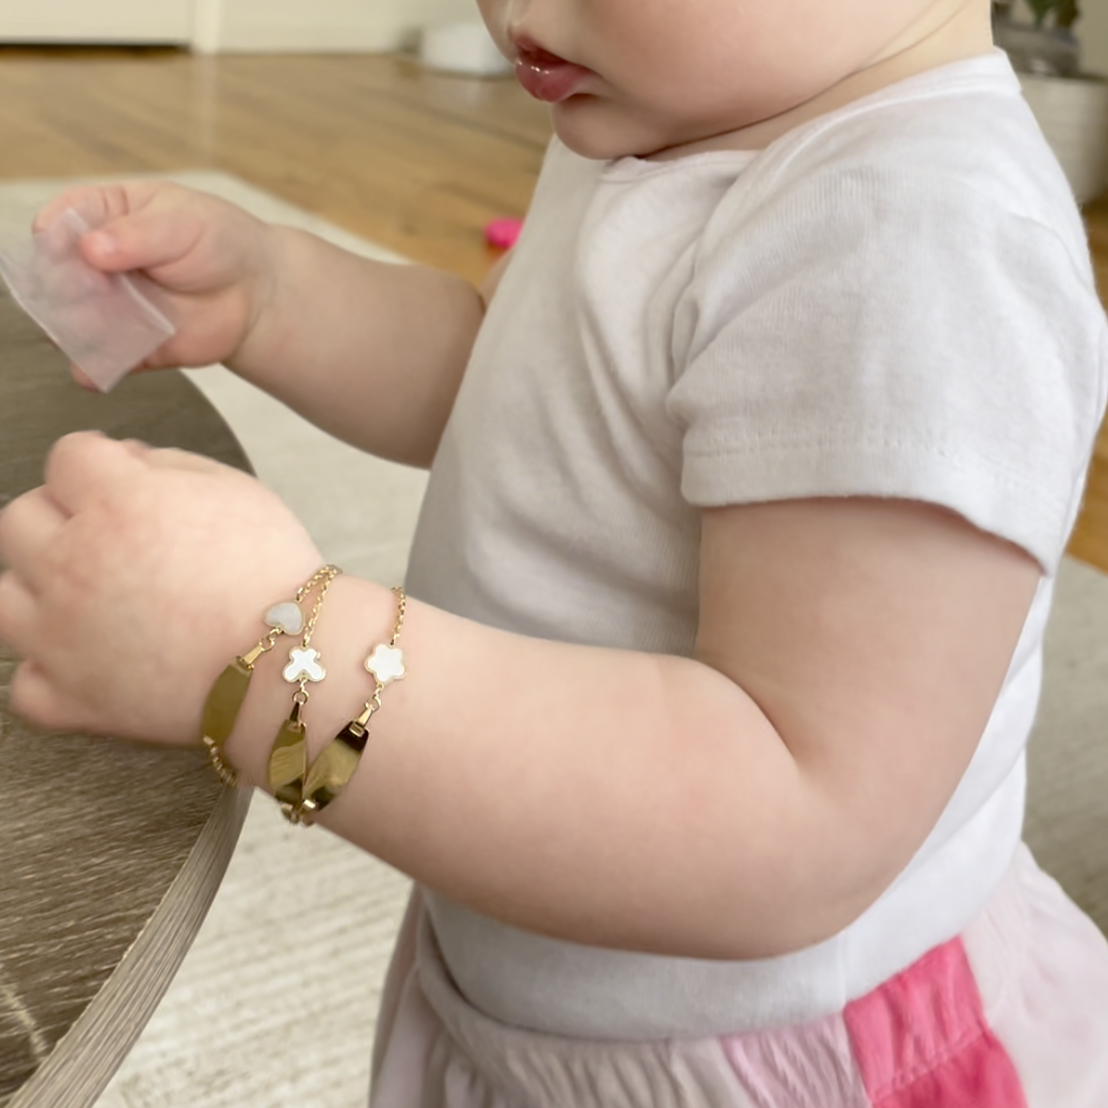 14k Solid Gold Baby Bracelet With Clover Charm / Adjustable -  Israel